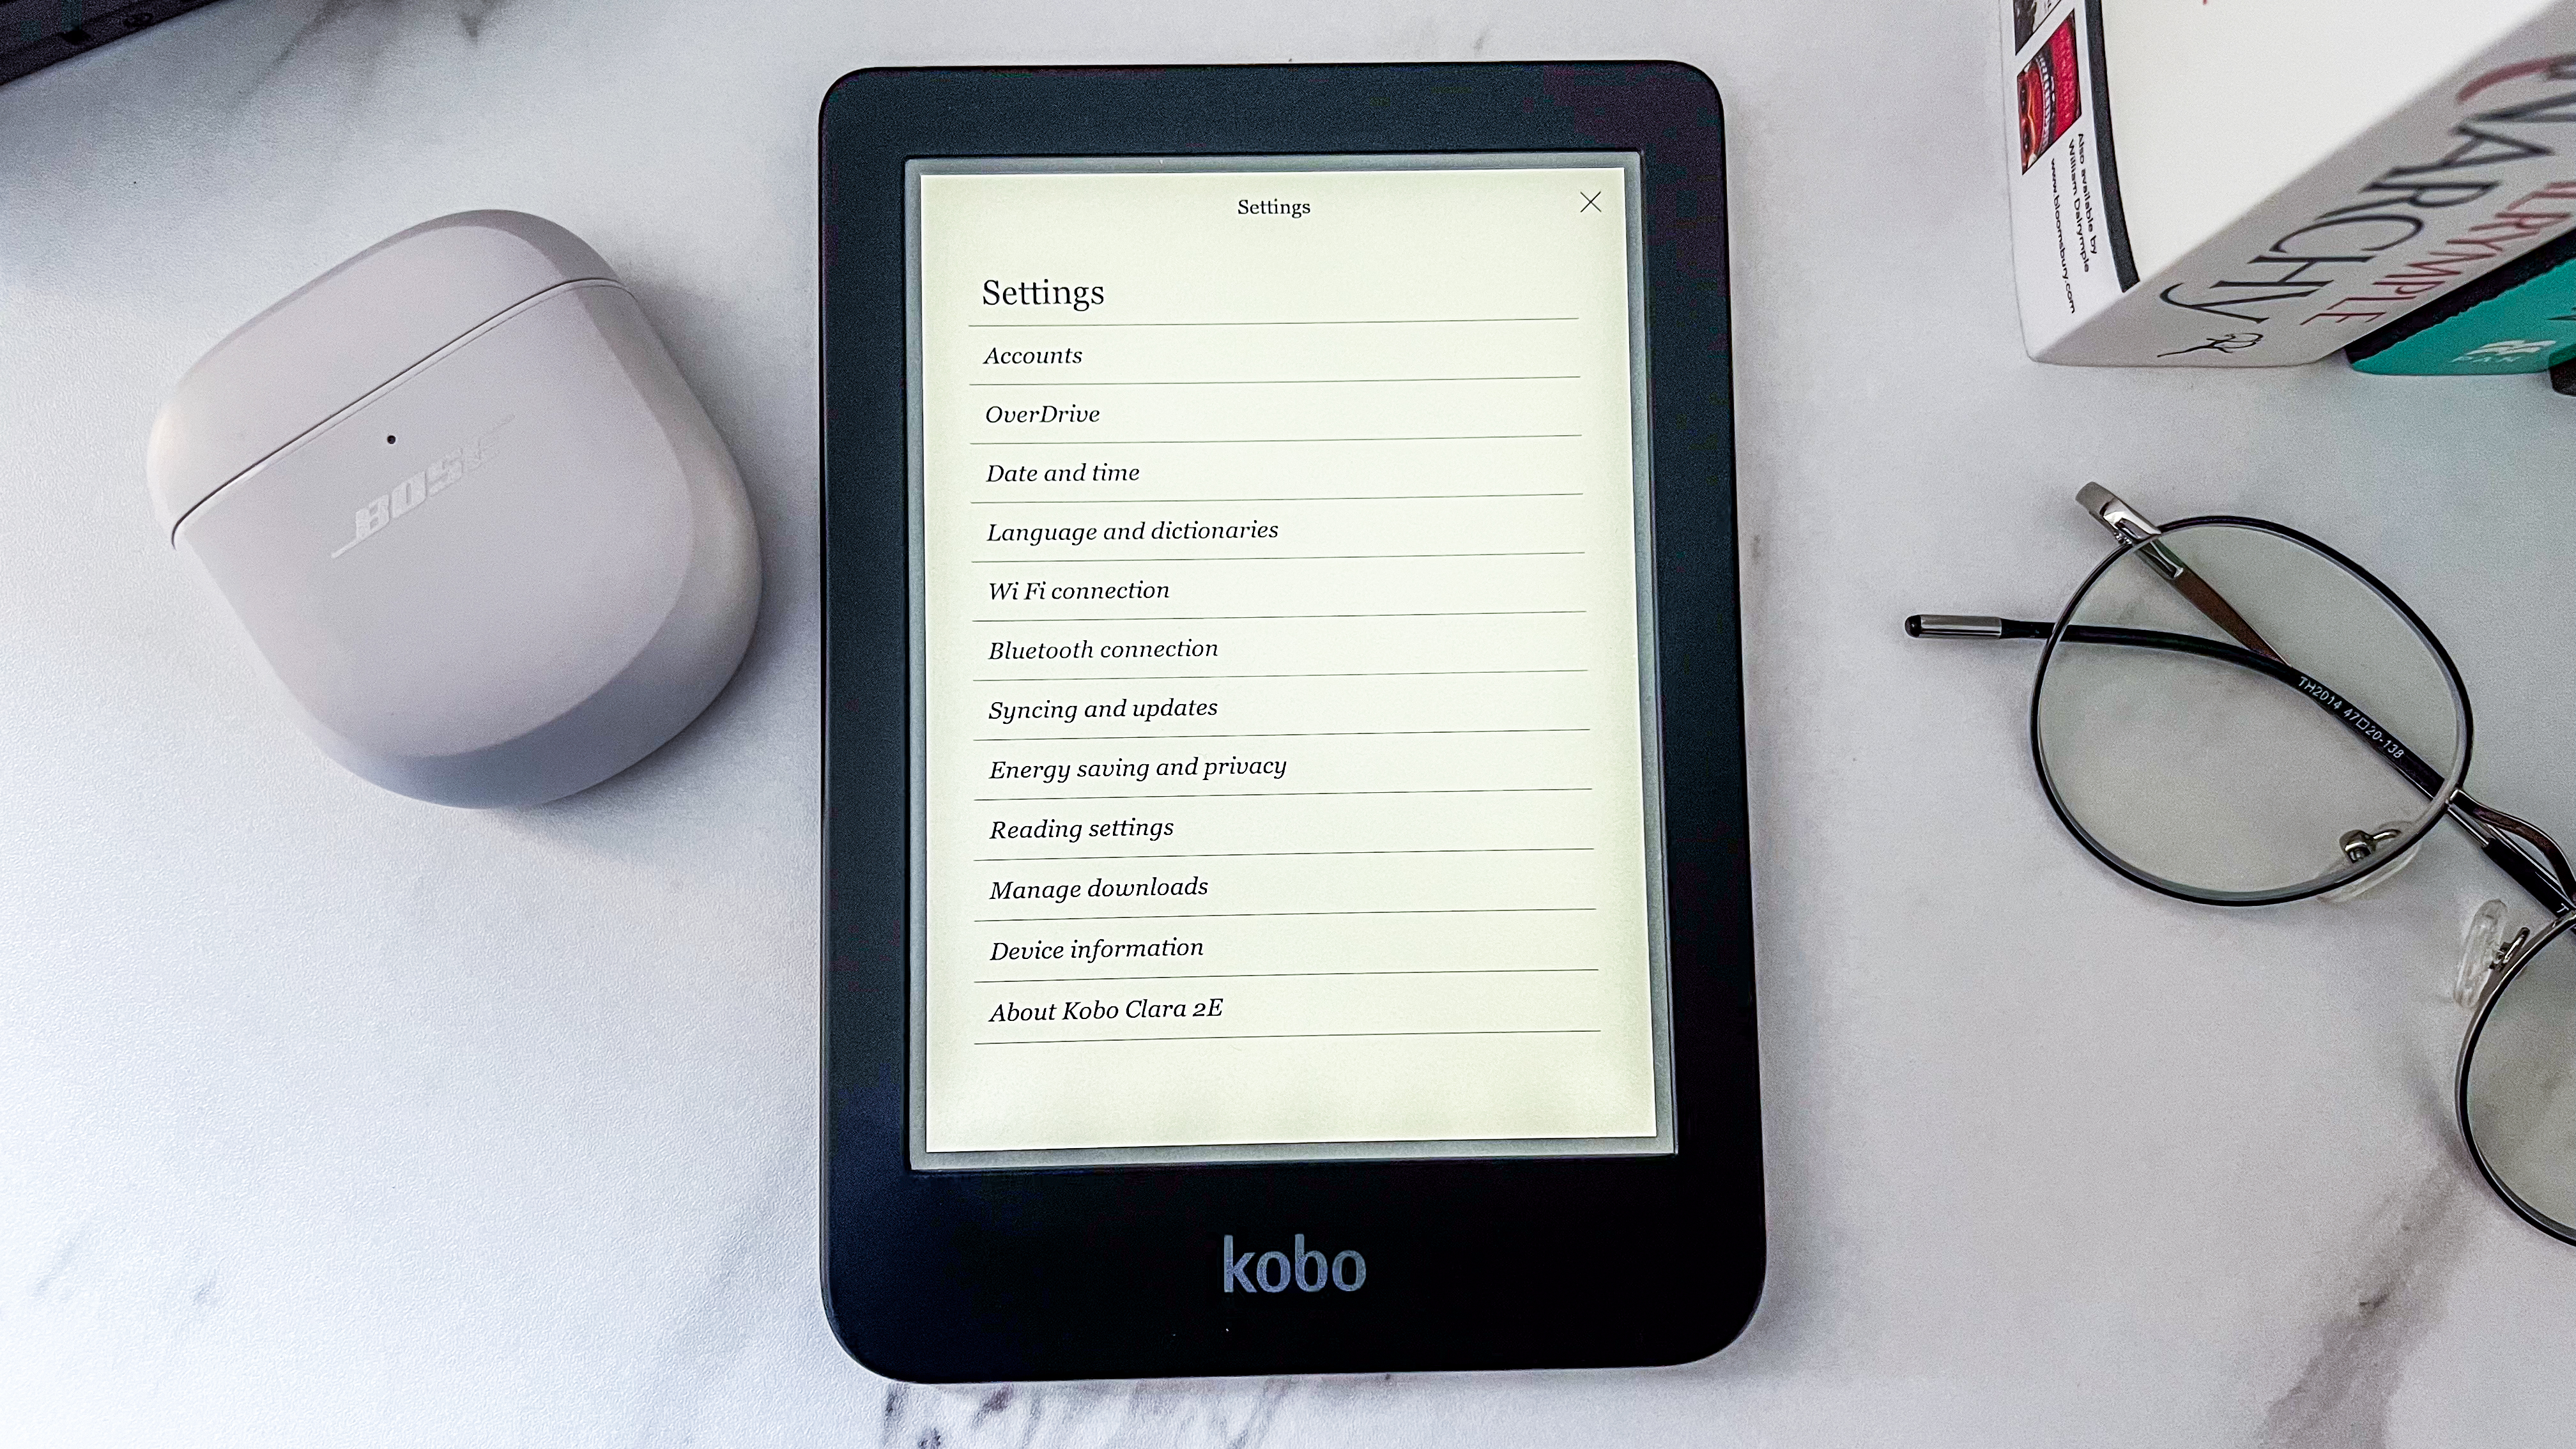 The settings pane on the Kobo Clara BW